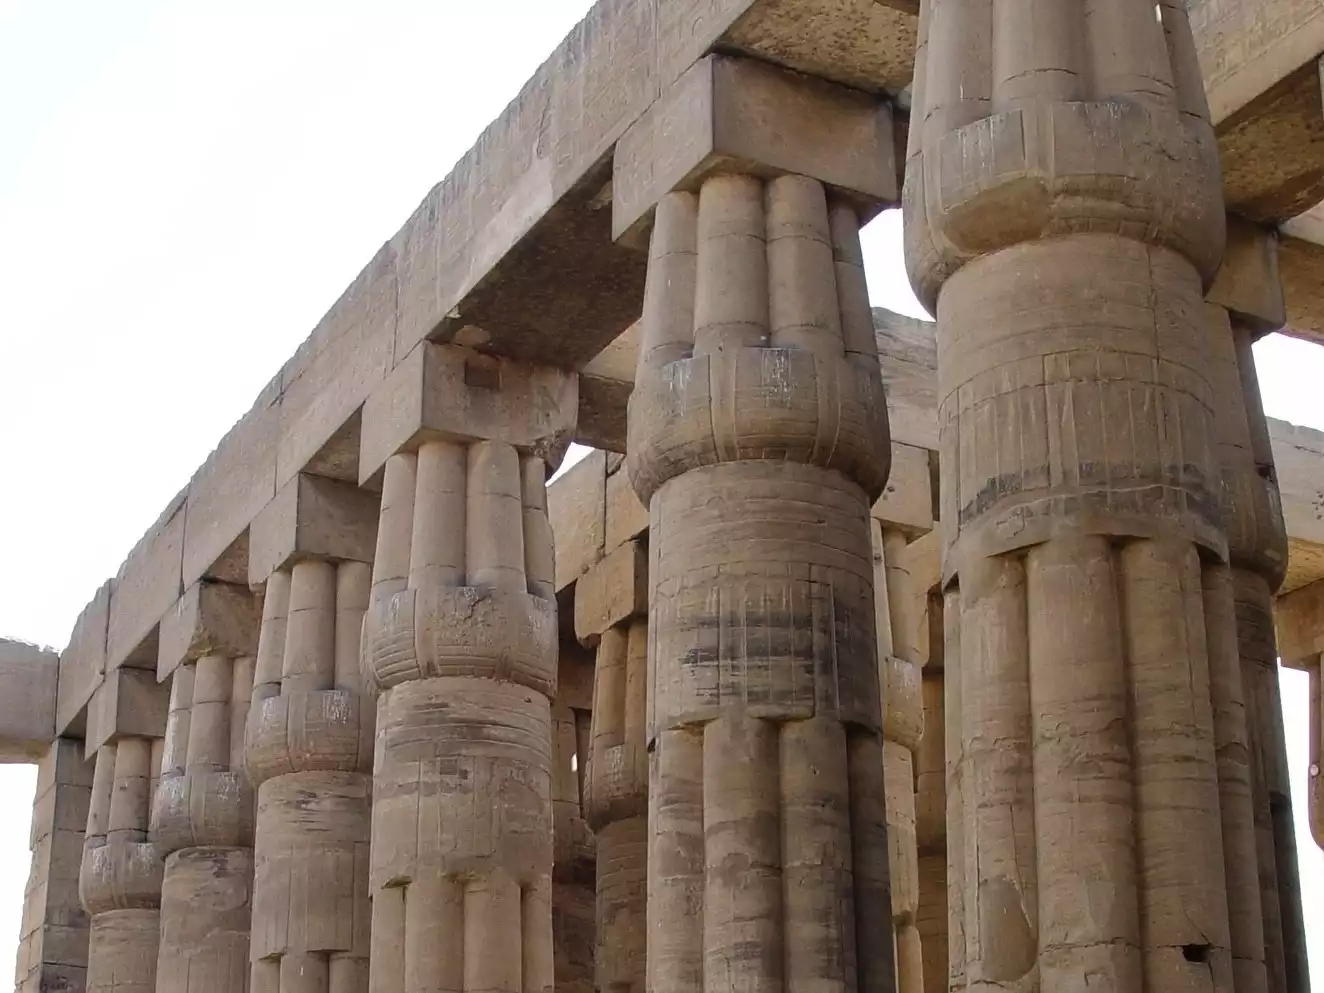 Lotiform-pillars-in-Luxor-Temple